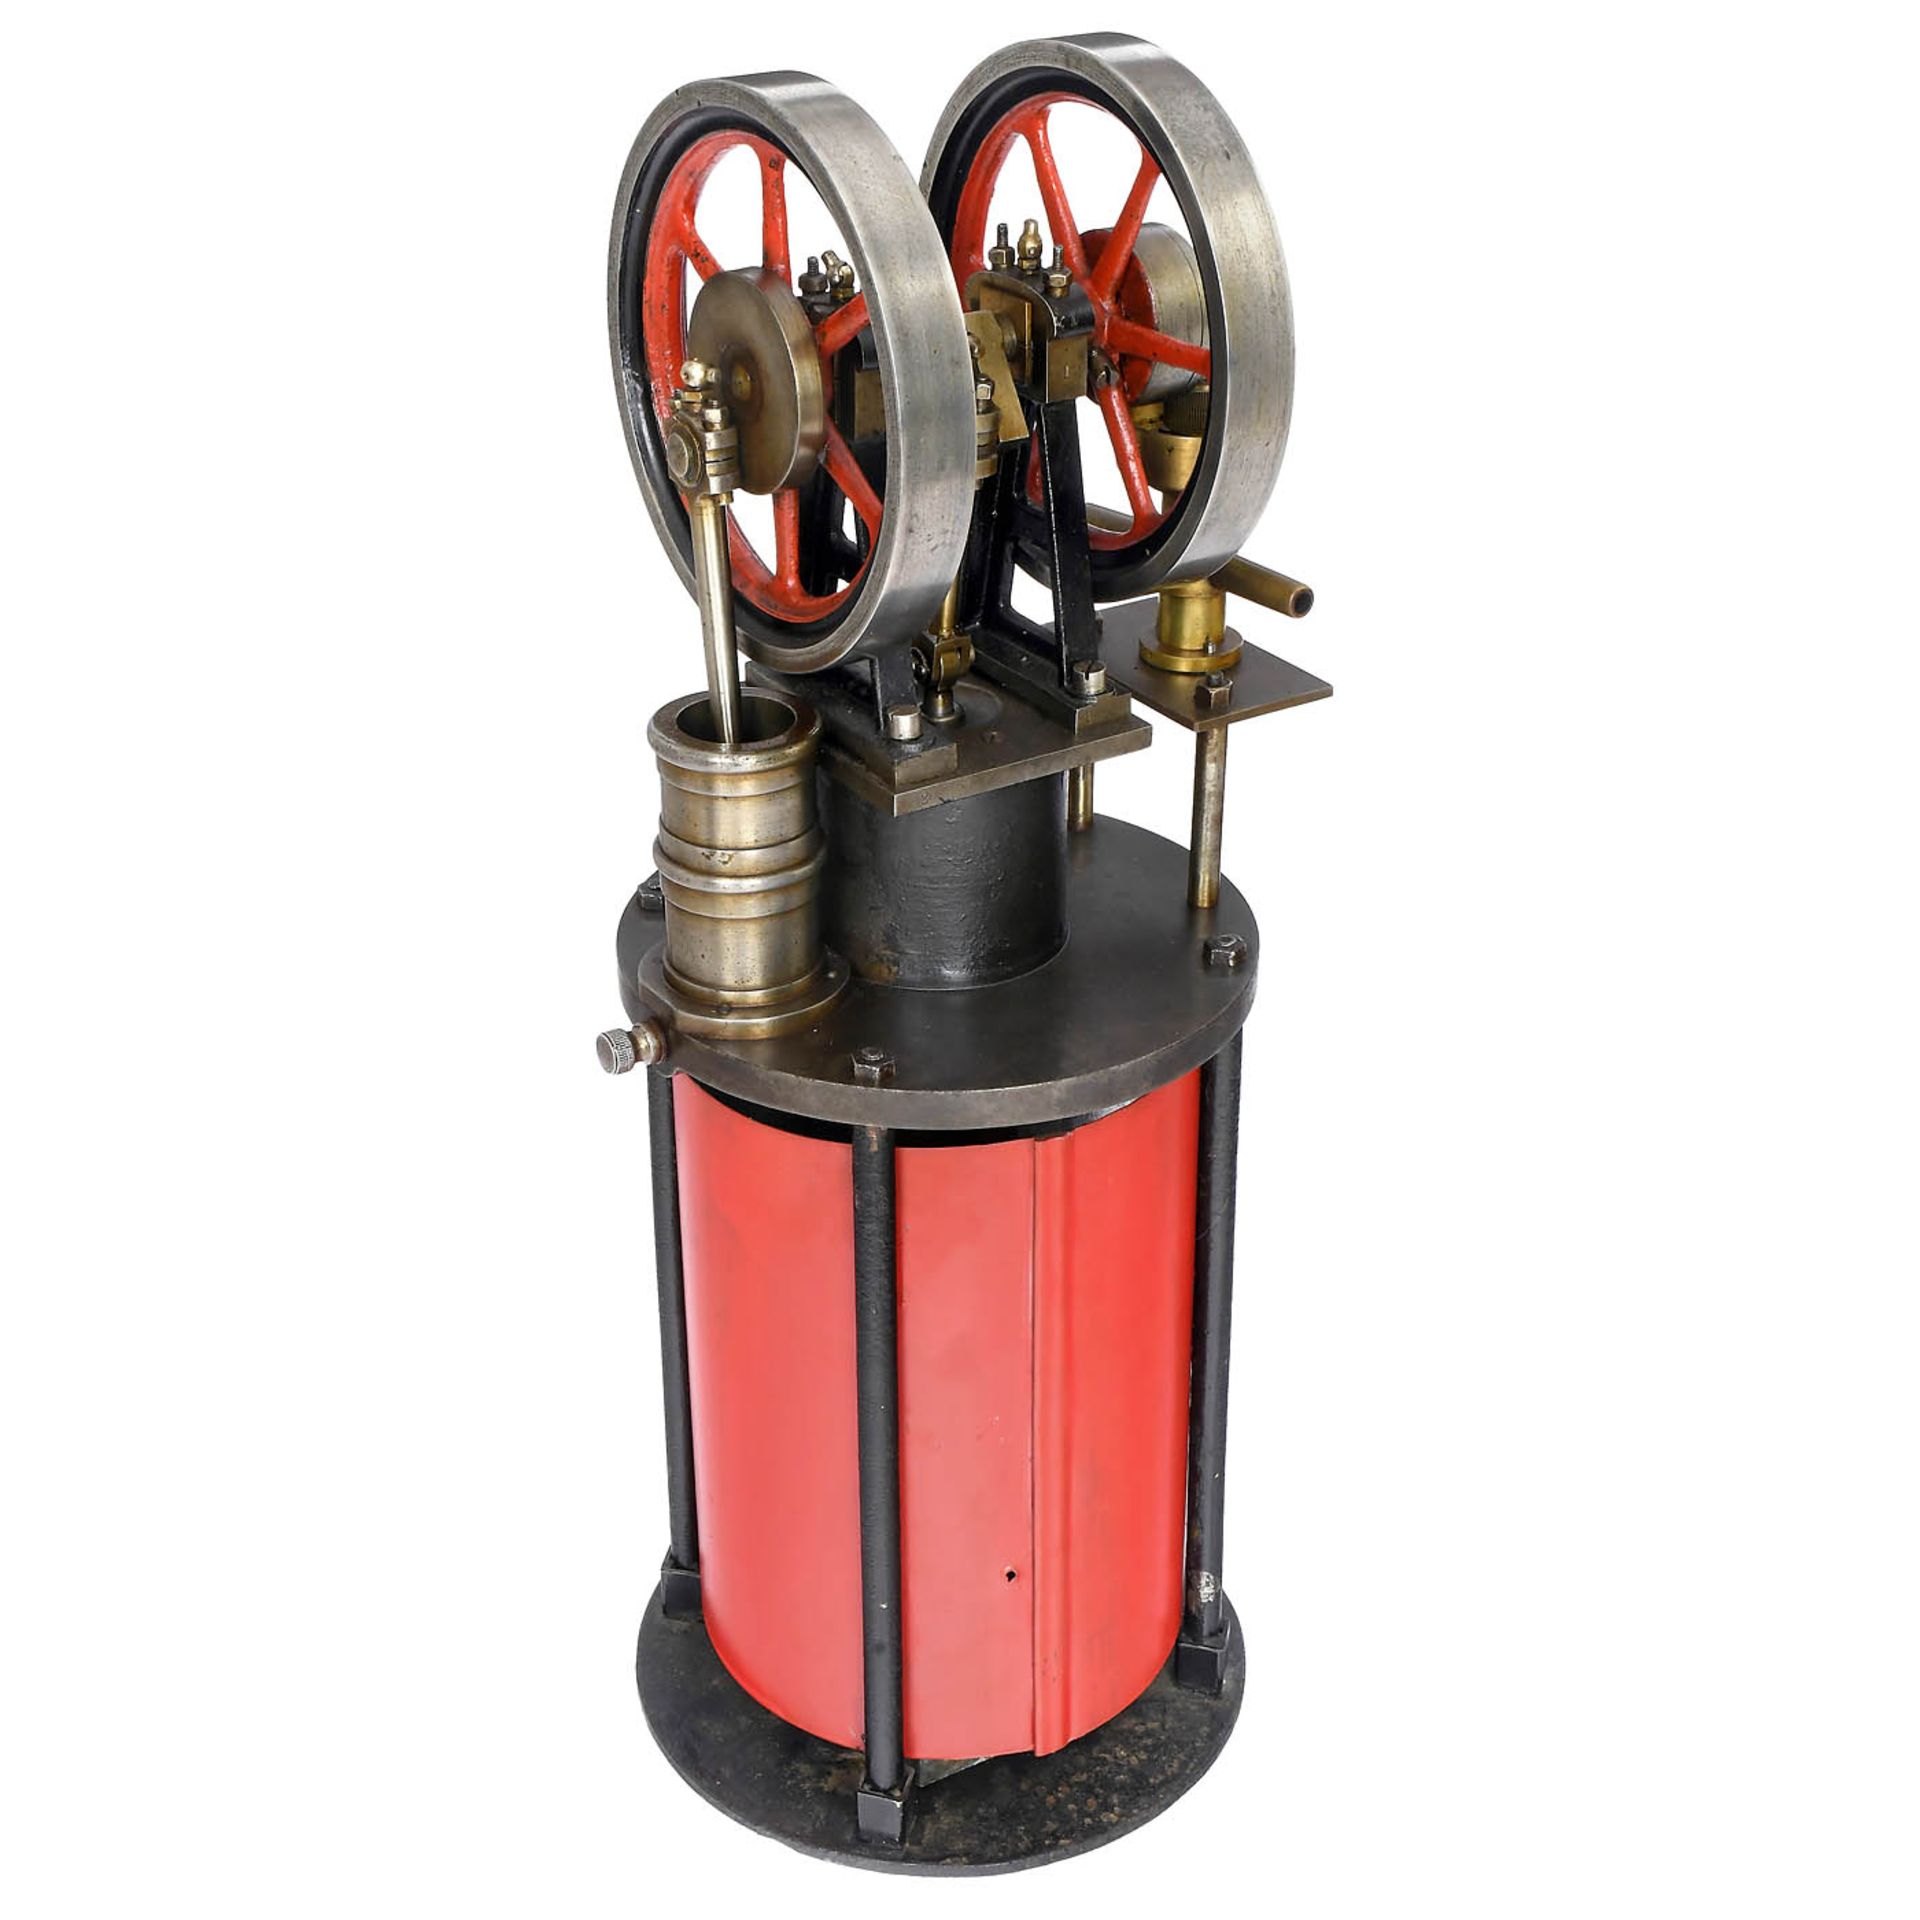 Heinrici-Type Hot-Air Engine, c. 1920